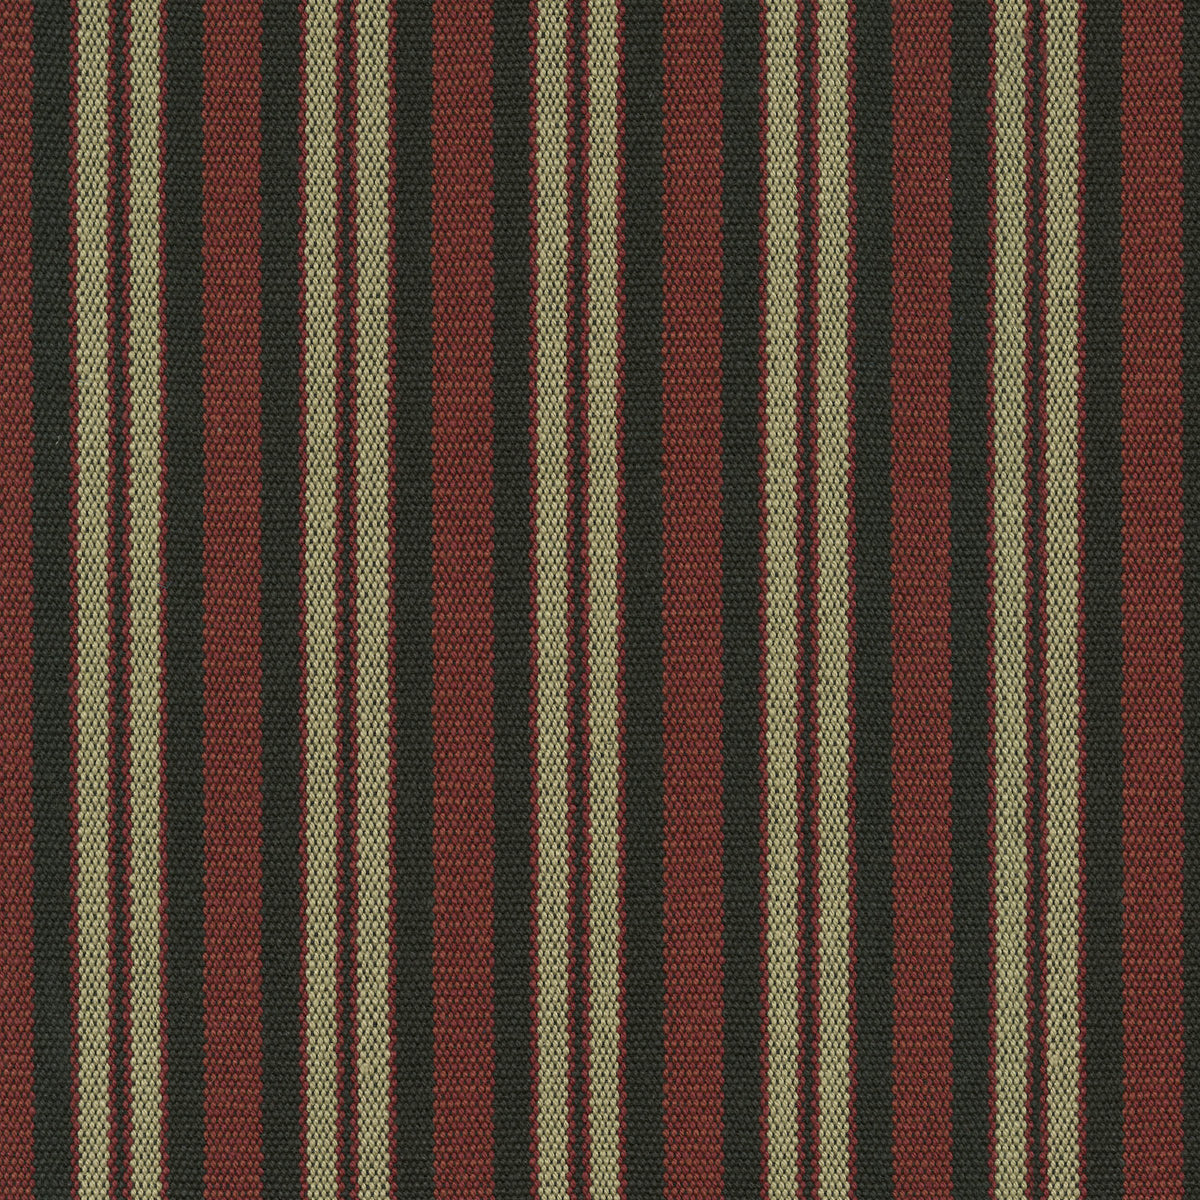 P/K Lifestyles Silverton Stripe - Cardinal 411691 Fabric Swatch